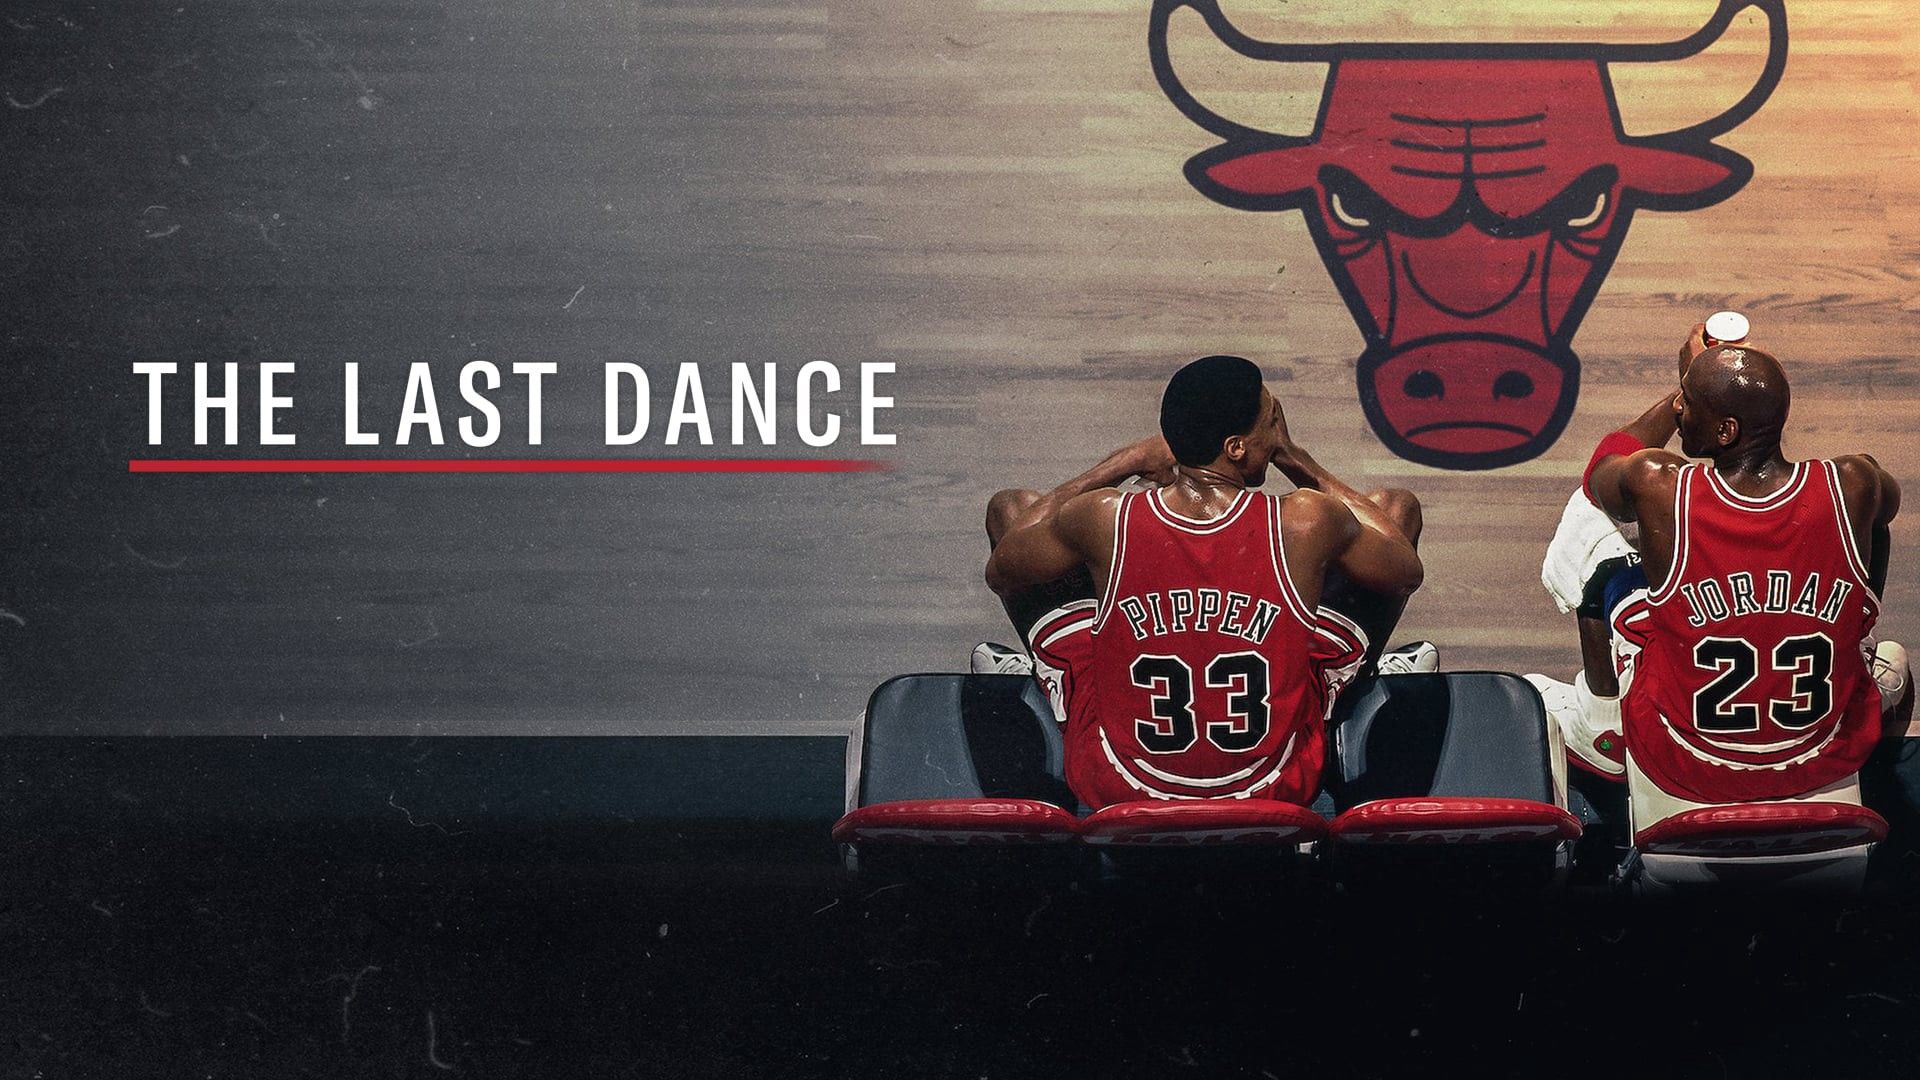 The Last Dance “Michael Jordan” Season 1 Episode 5, (FULL EPISODES)